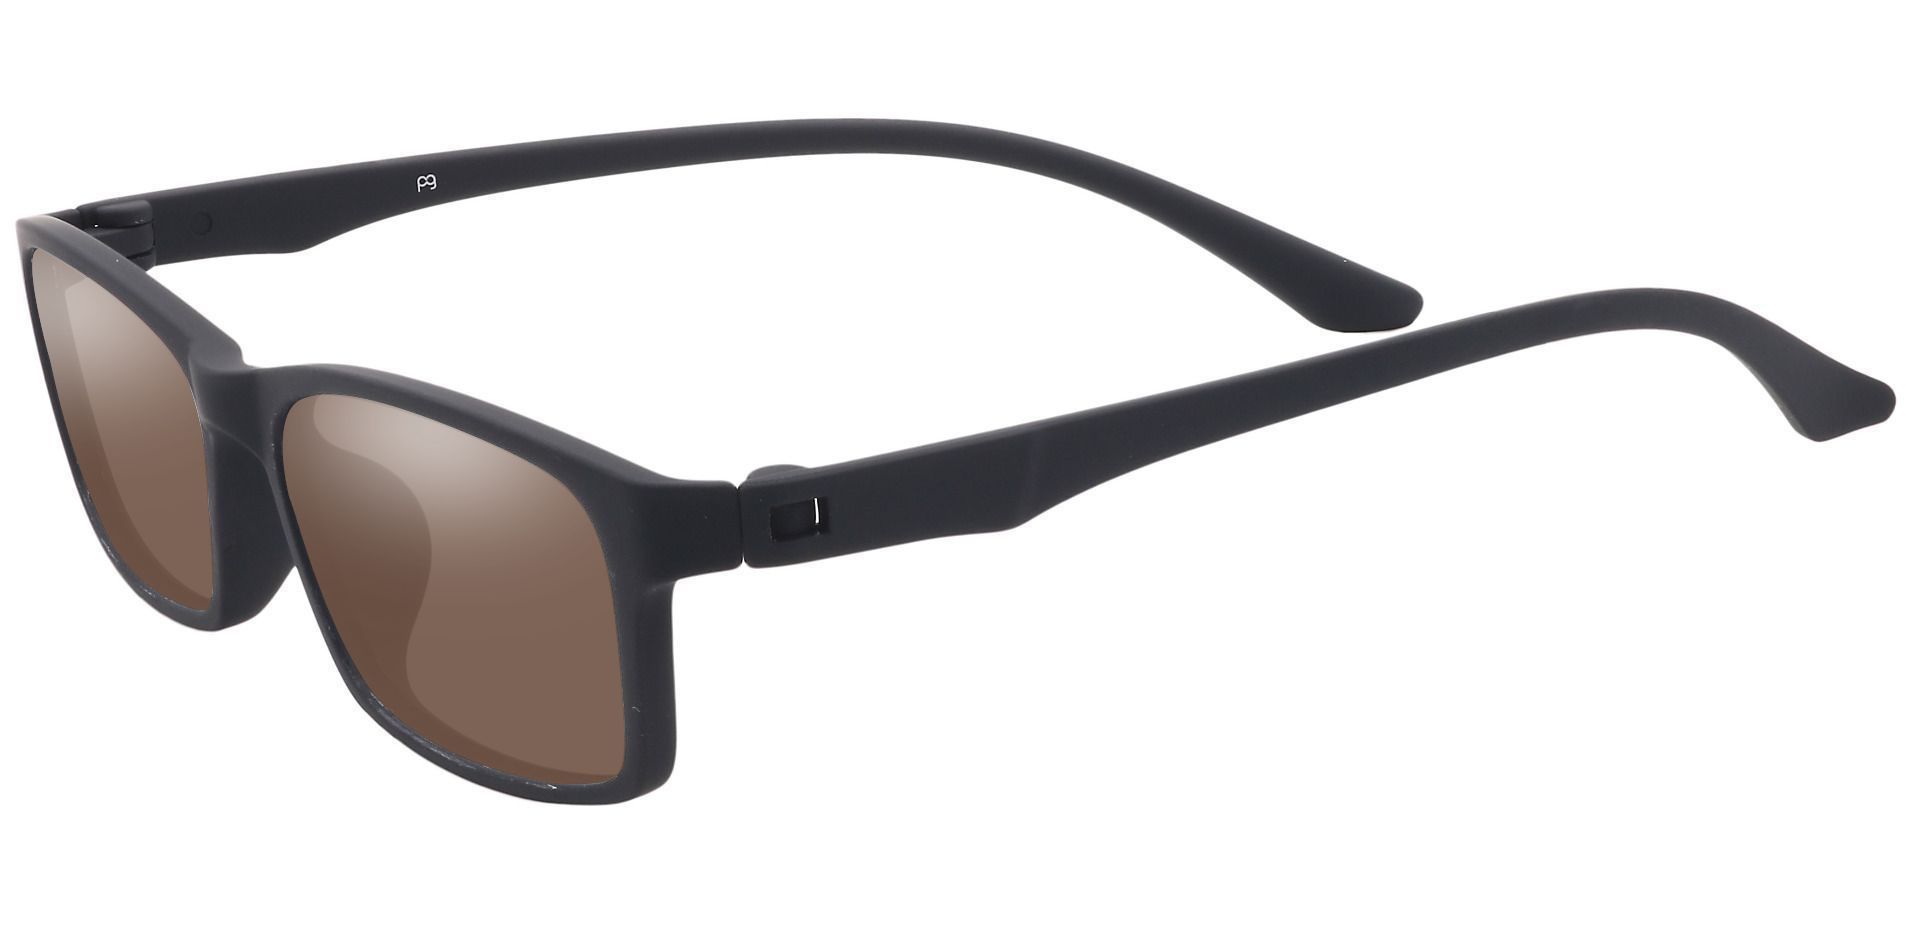 Poplar Rectangle Progressive Sunglasses - Black Frame With Brown Lenses